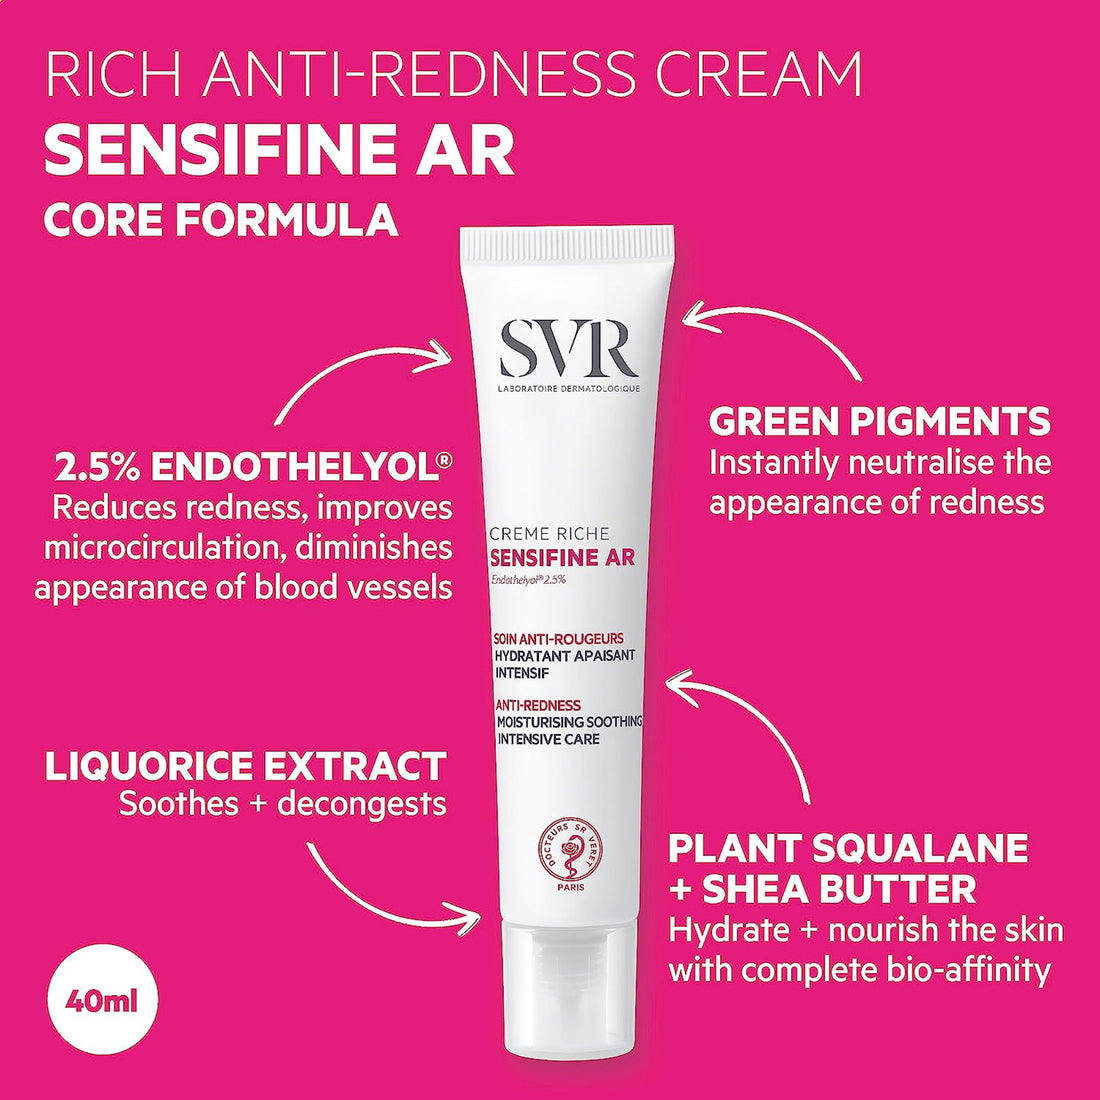 Sensifine AR Crème Anti-Redness Cream